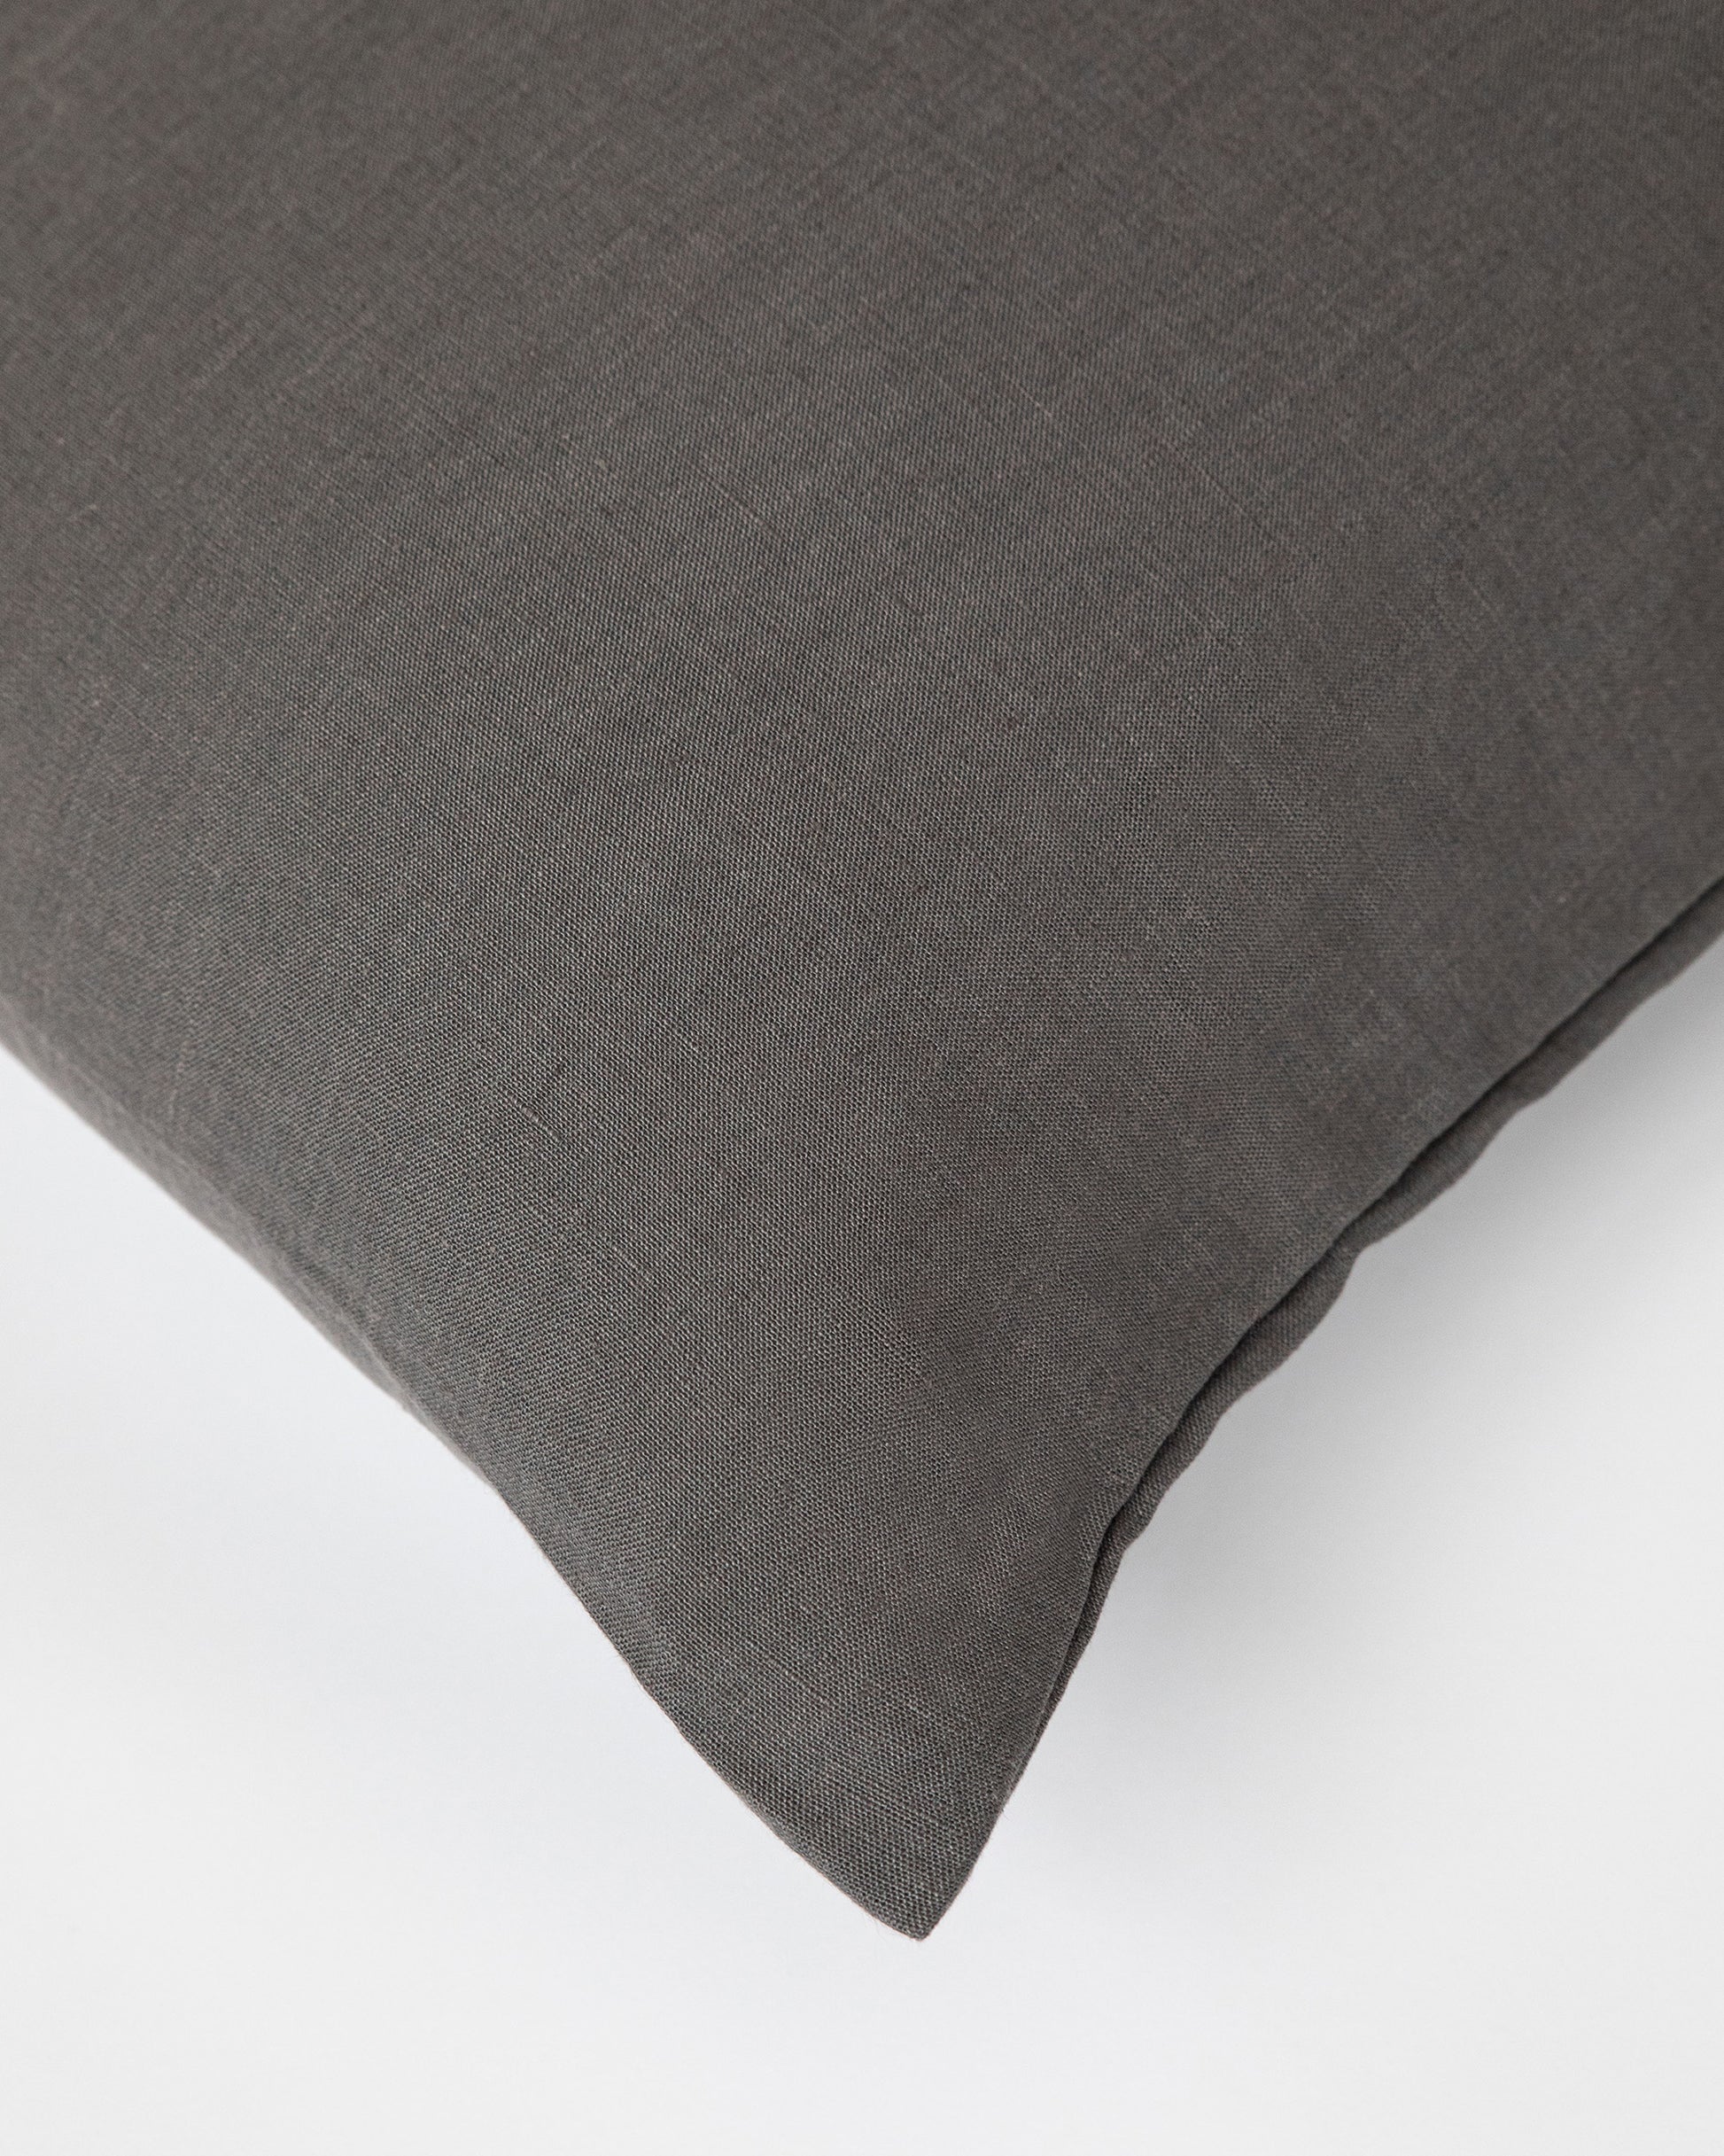 Body pillowcase in Charcoal gray - MagicLinen